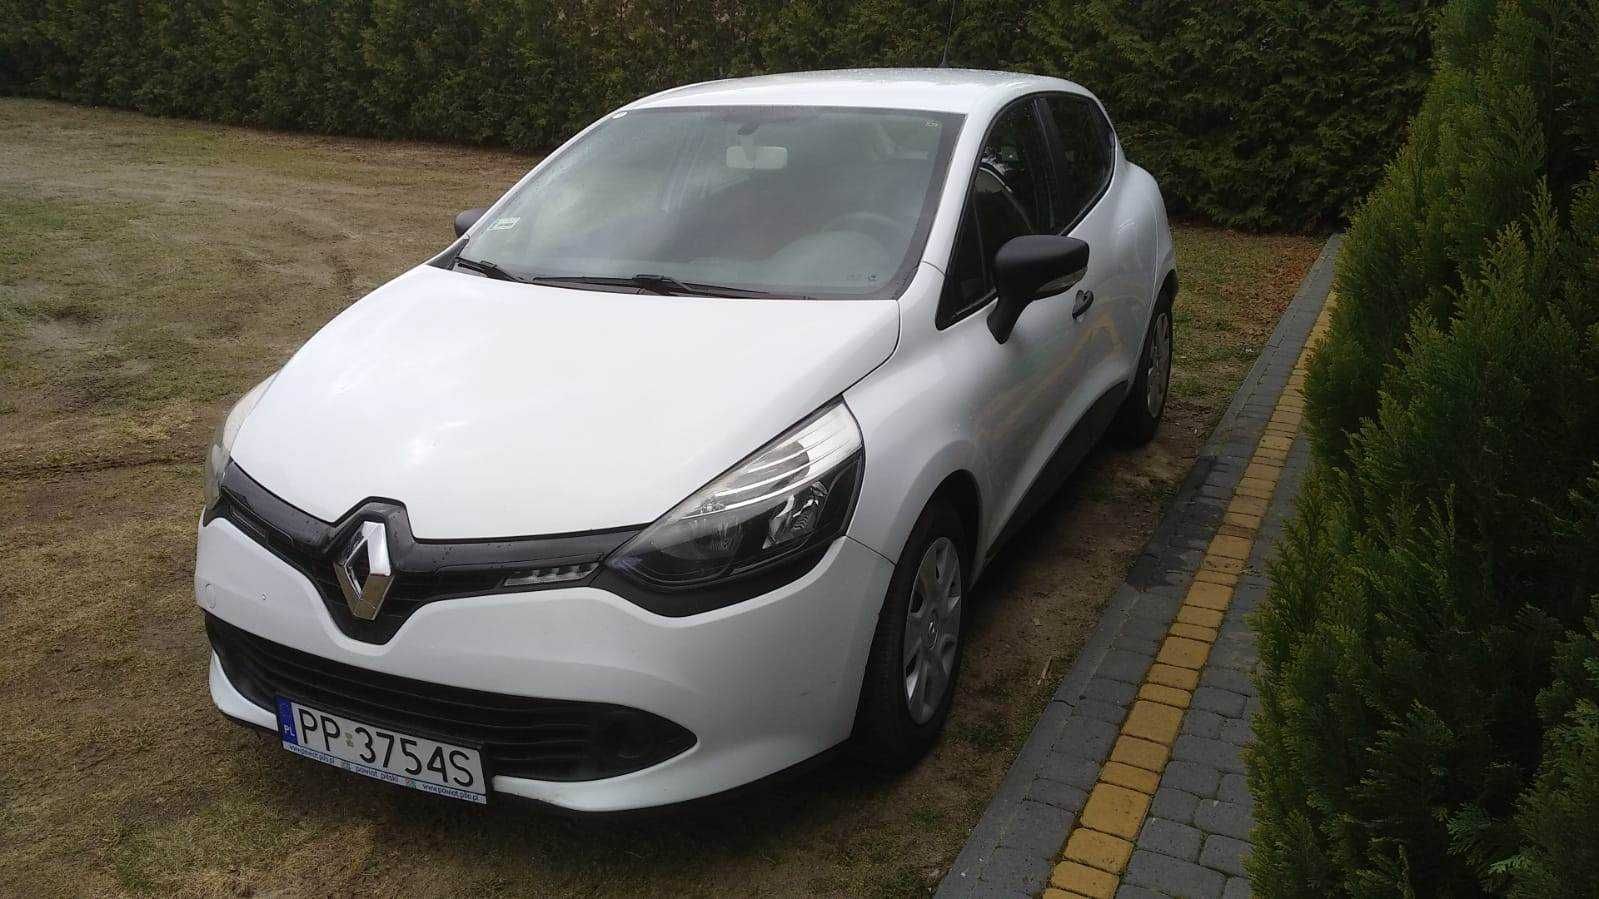 Renault Clio IV 1,5 Dci klima, van 2014 VAT1 2os zamiana 4x4 cabrio